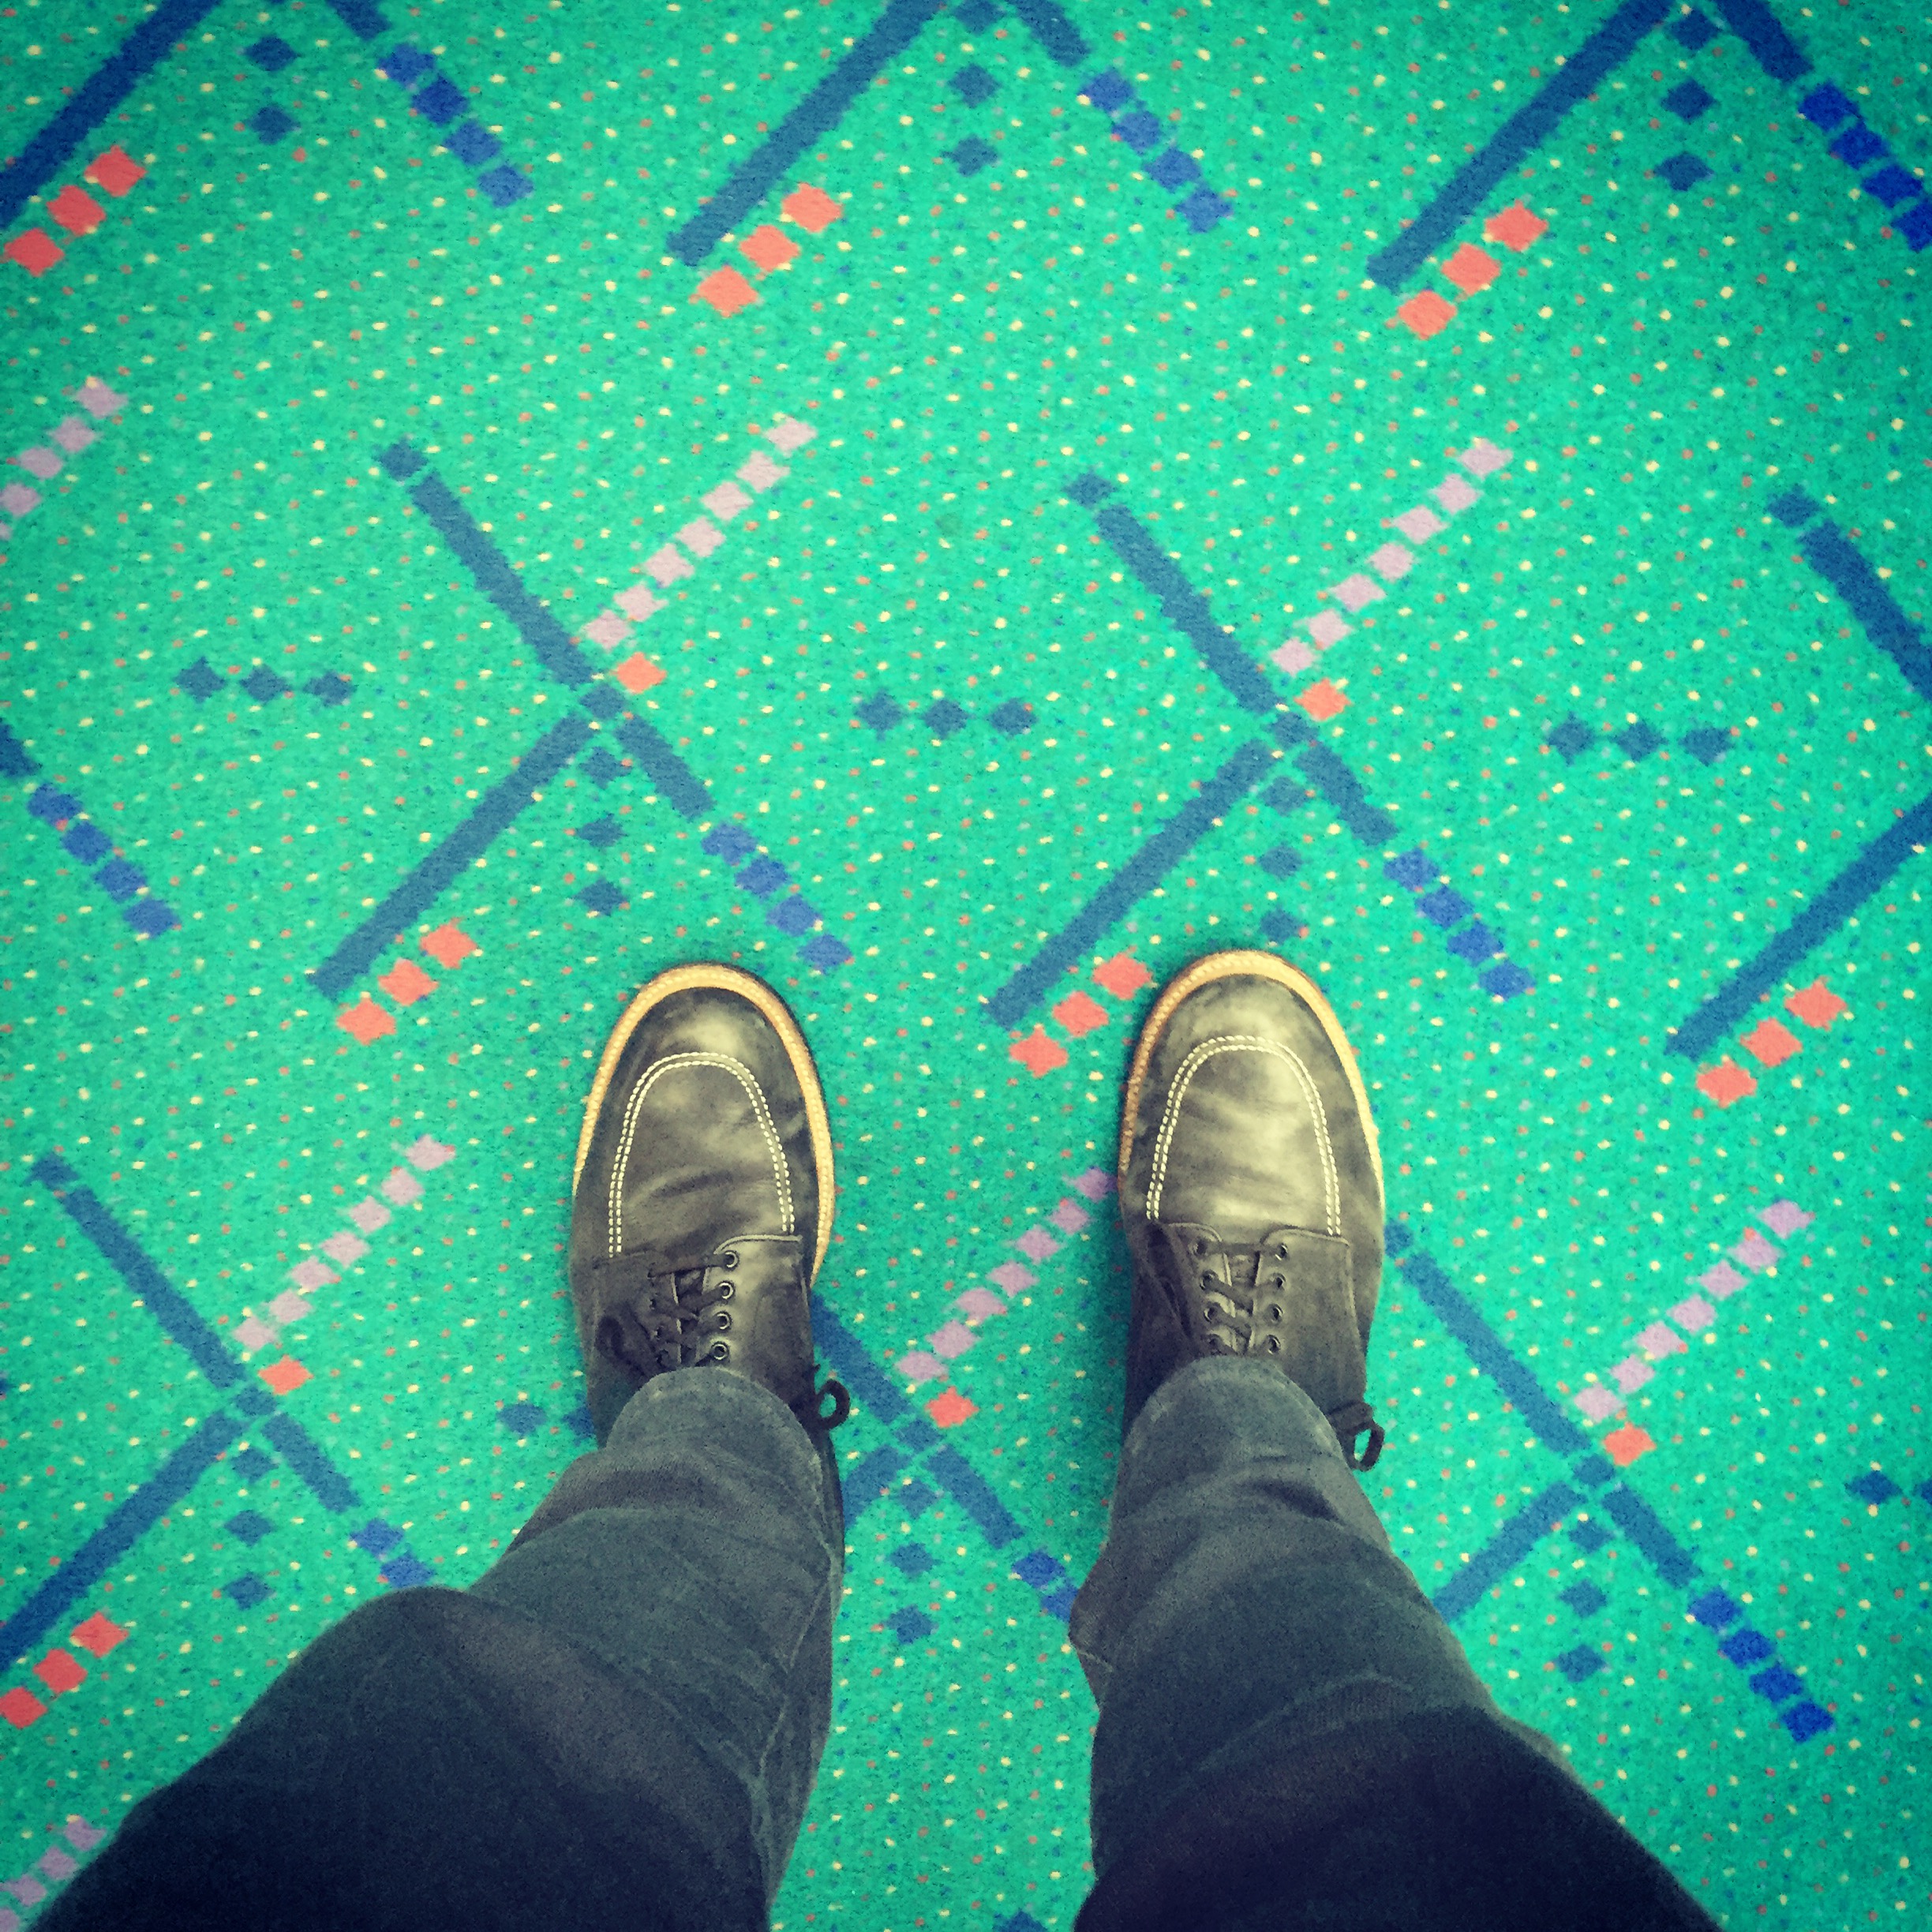 Pdx airport carpet